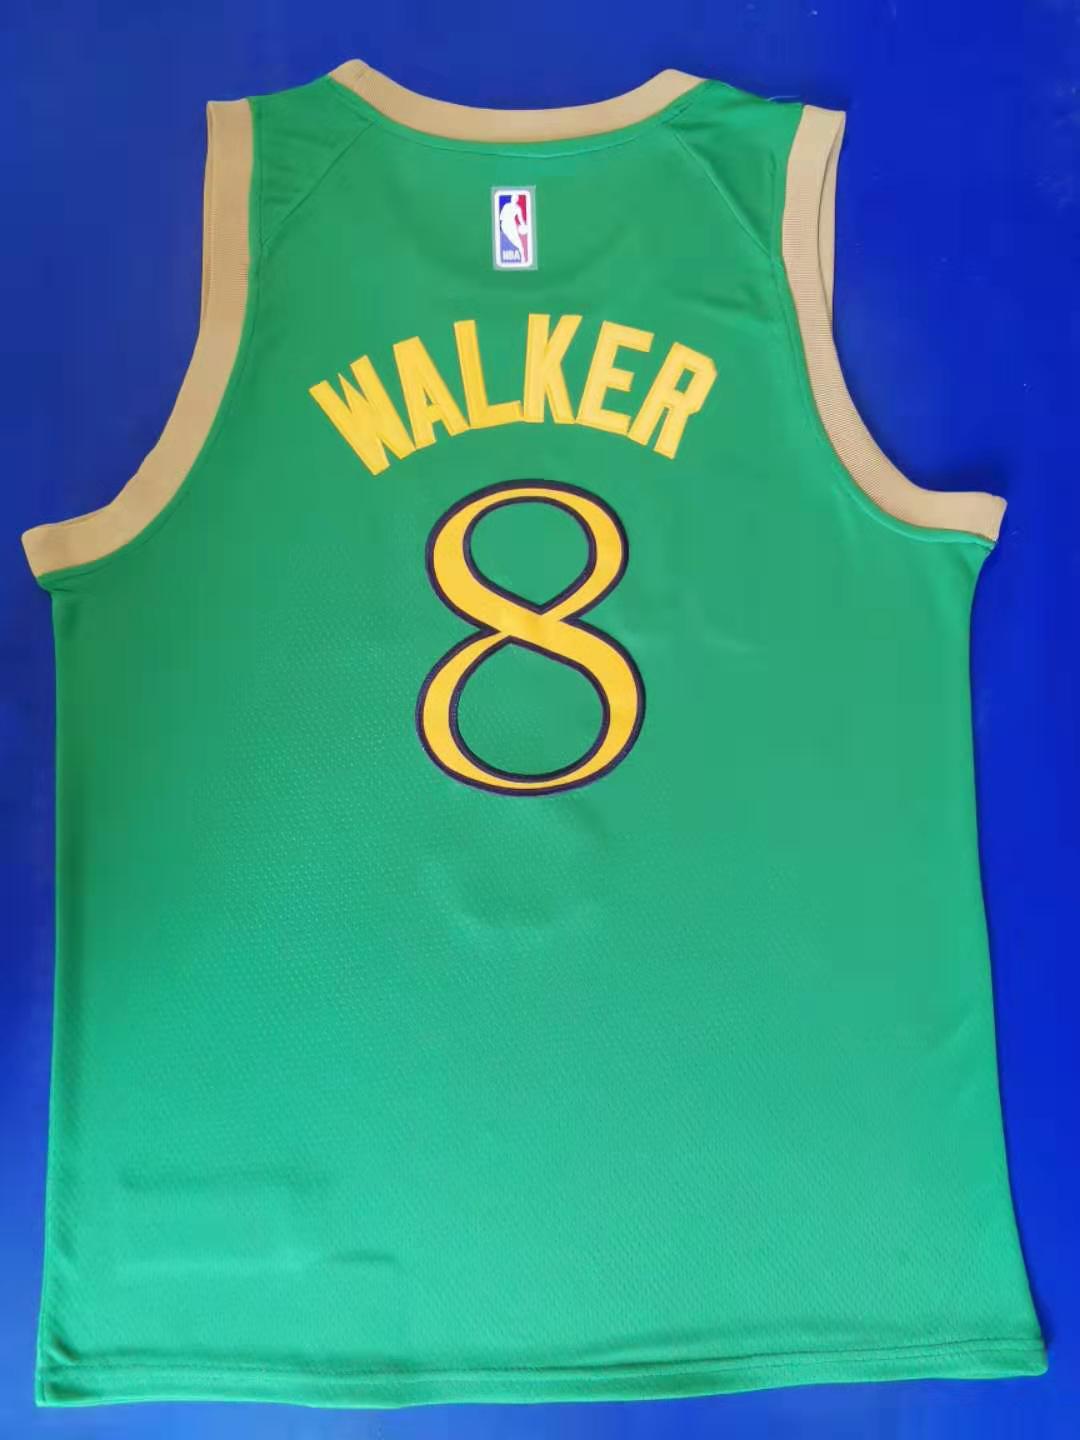 2020 Men Boston Celtics 8 Walker Green City Edition limited Nike NBA Jerseys